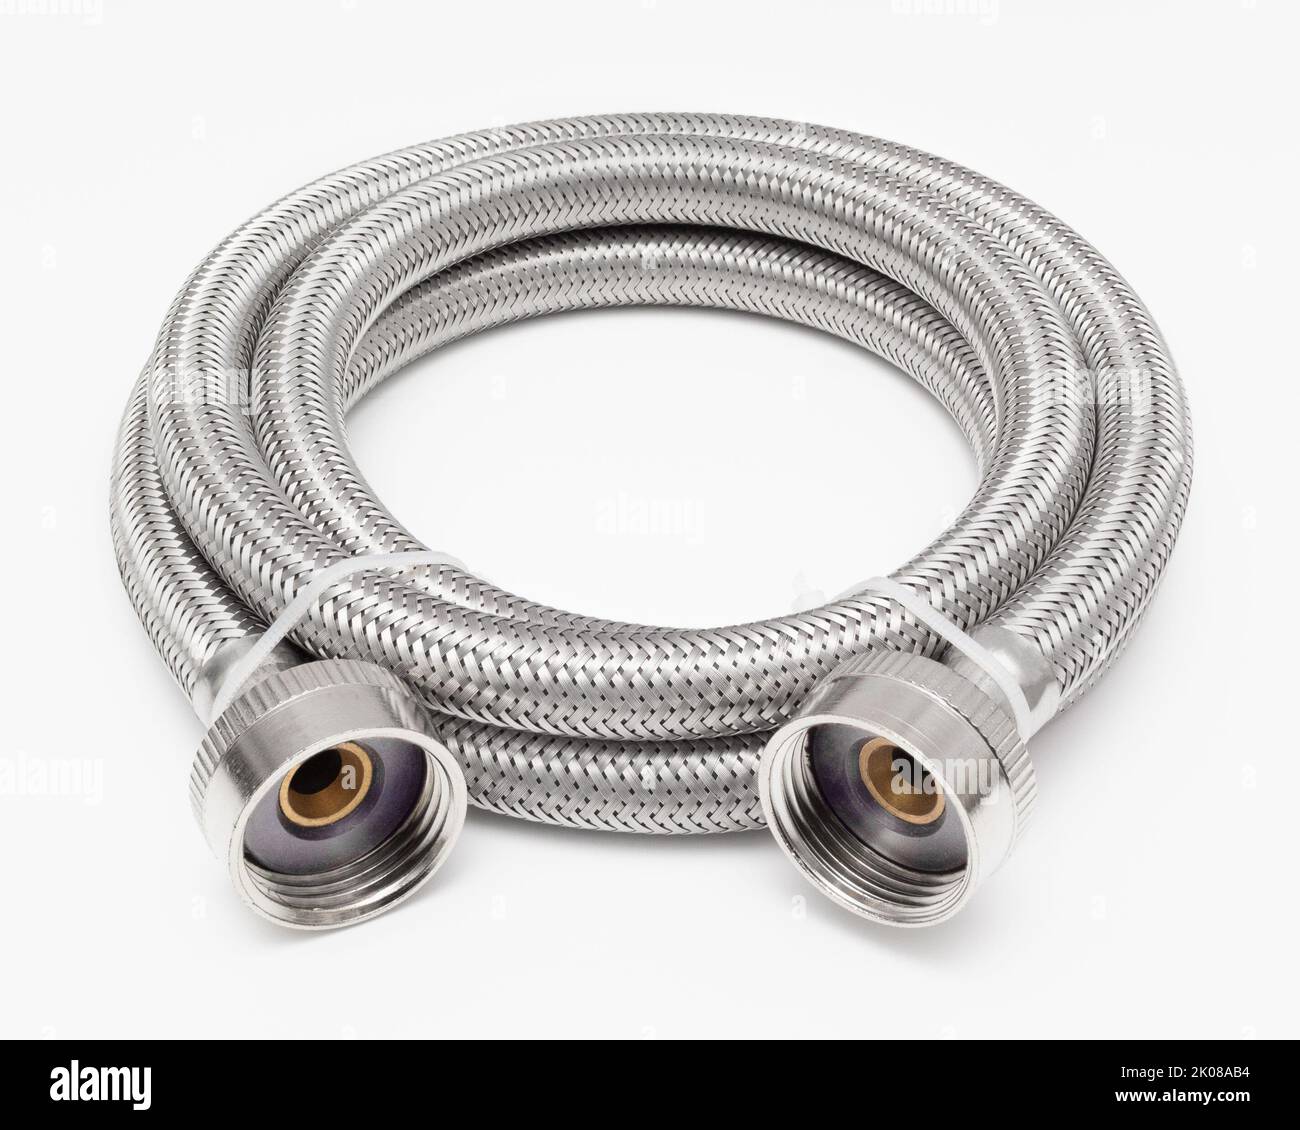 Flexible metal plumbing hose on white surface Stock Photo